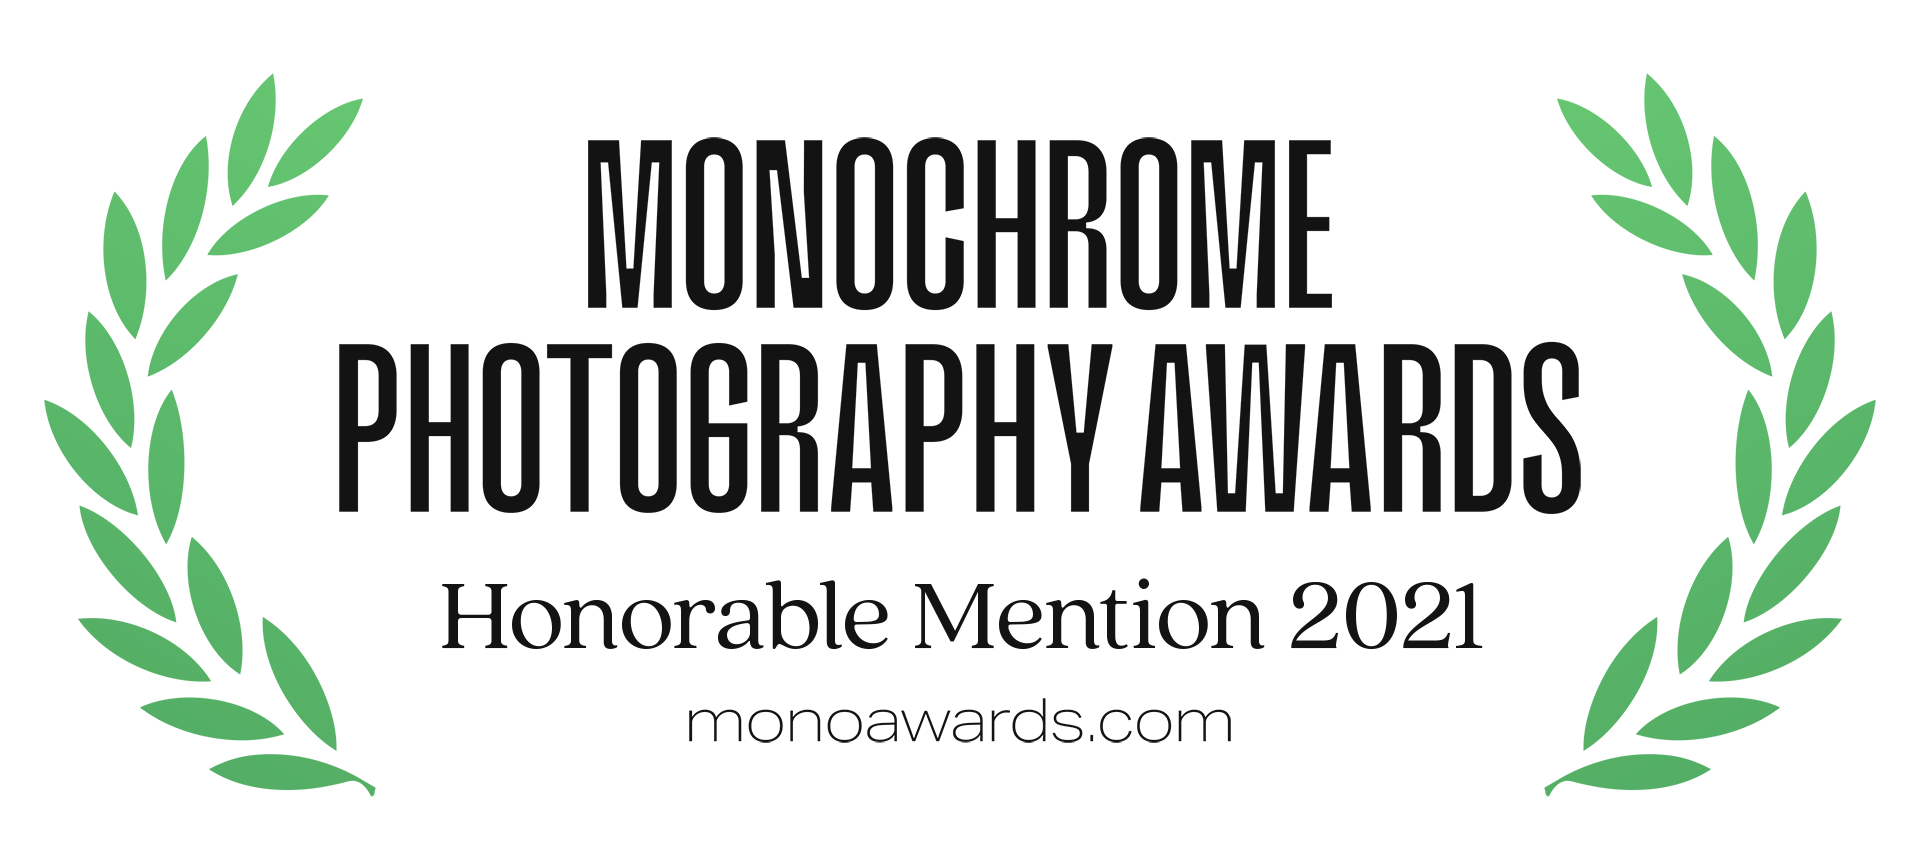 monochrome_awards_2021_hm.png